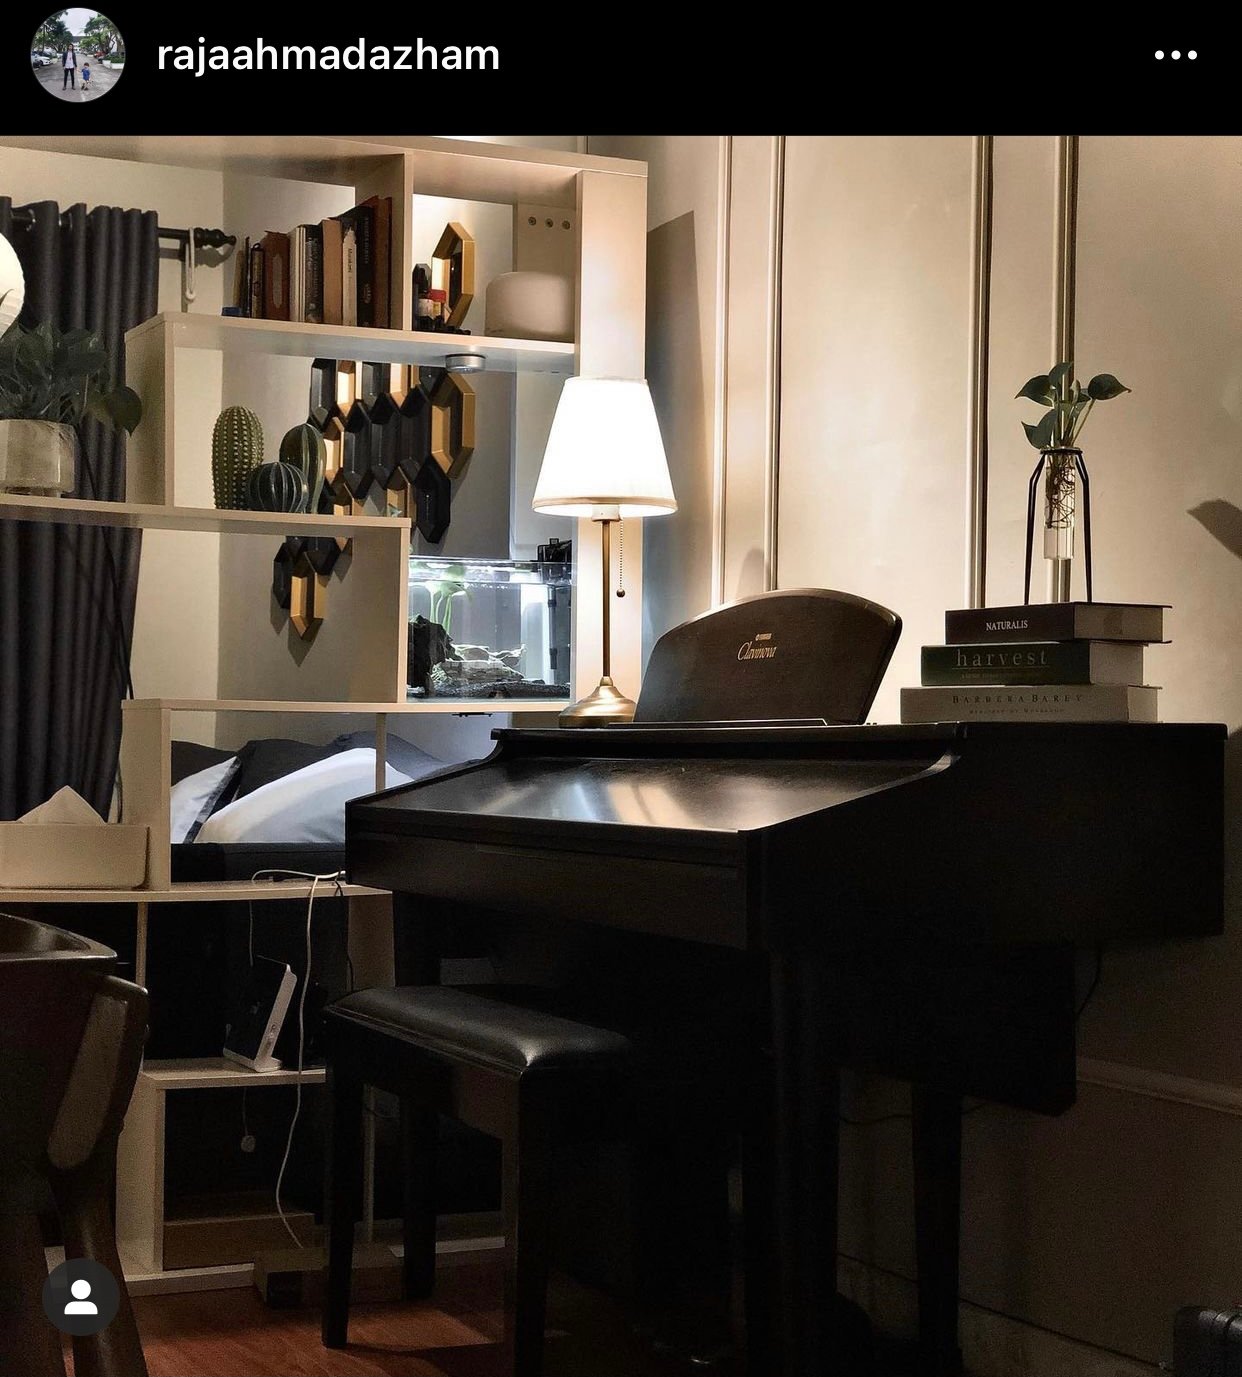 Clavinova piano in home next to divider shelf at night.